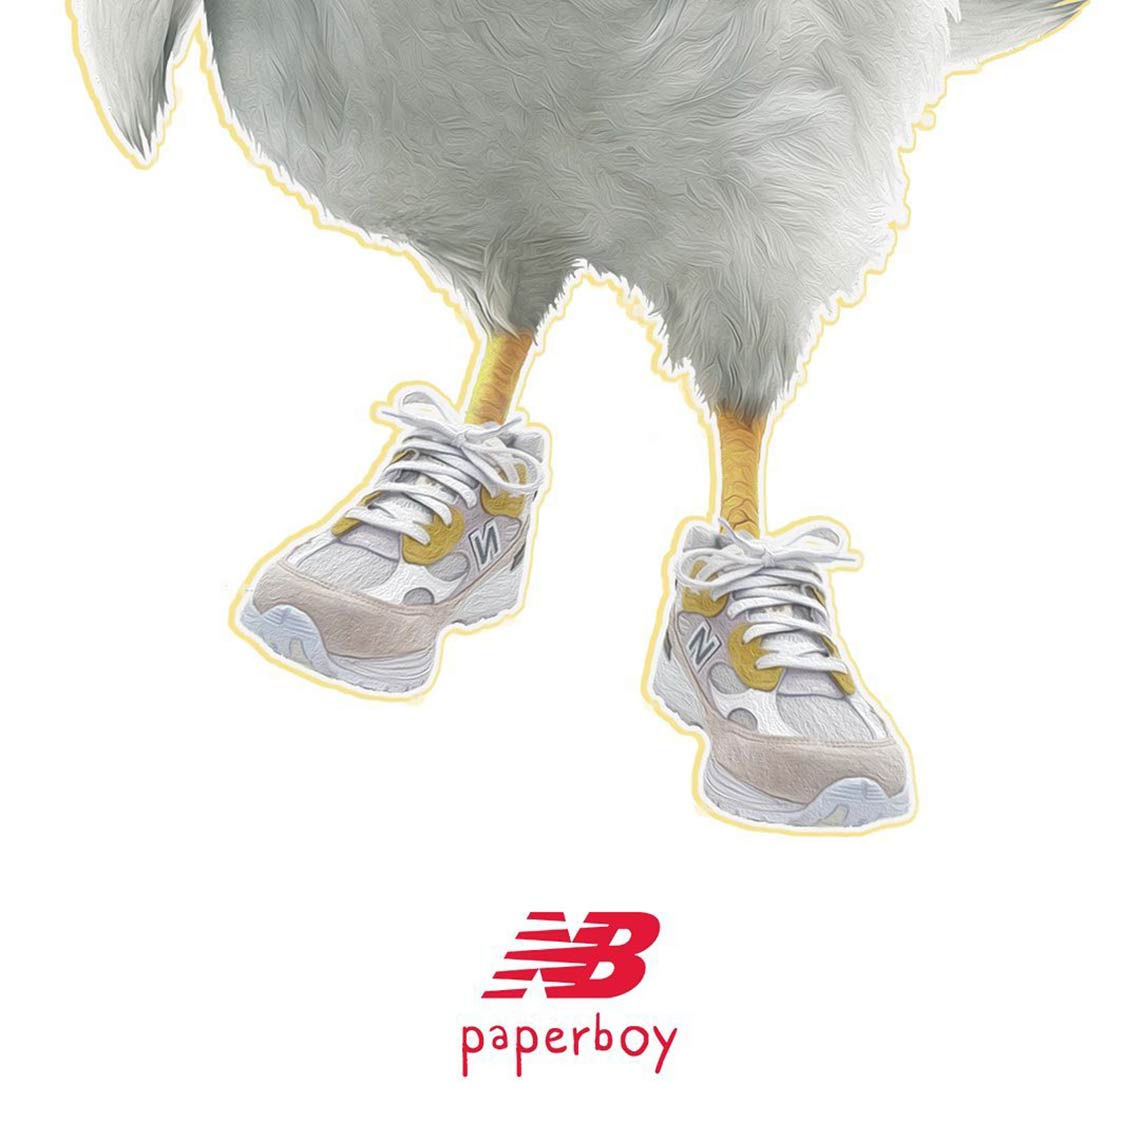 Paperboy Paris New Balance 992 Release Date | SneakerNews.com